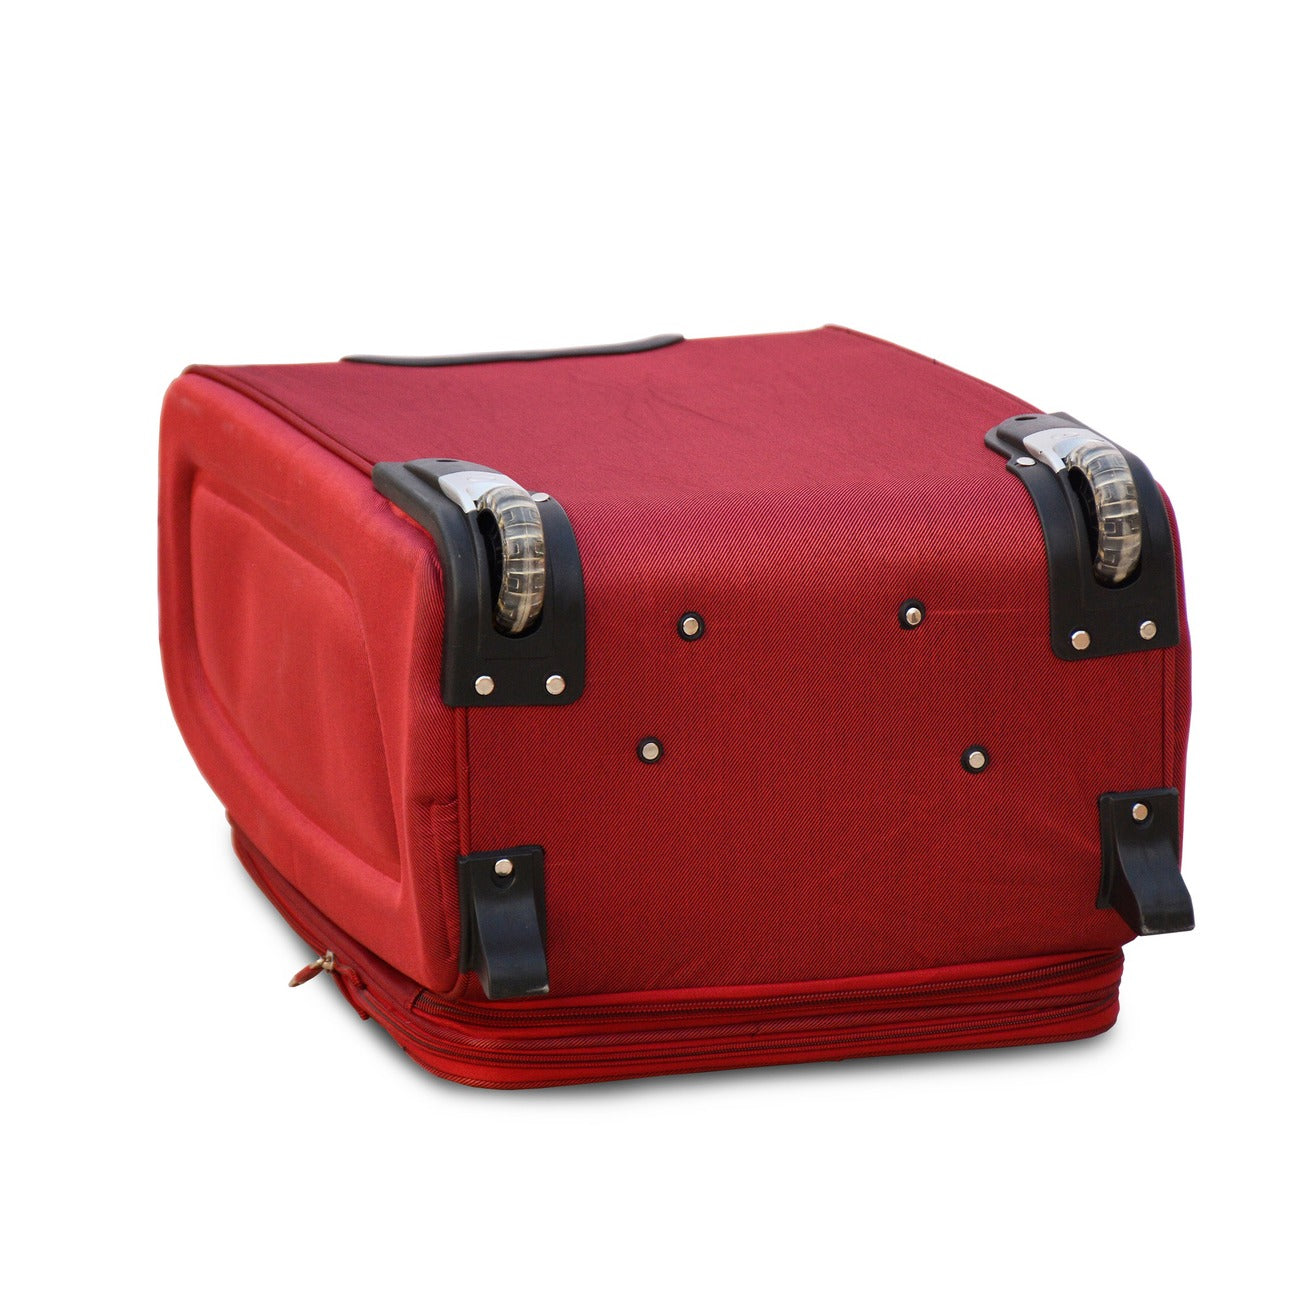 32" Red Colour SJ JIAN 2 Wheel Luggage Lightweight Soft Material Trolley Bag Zaappy.com